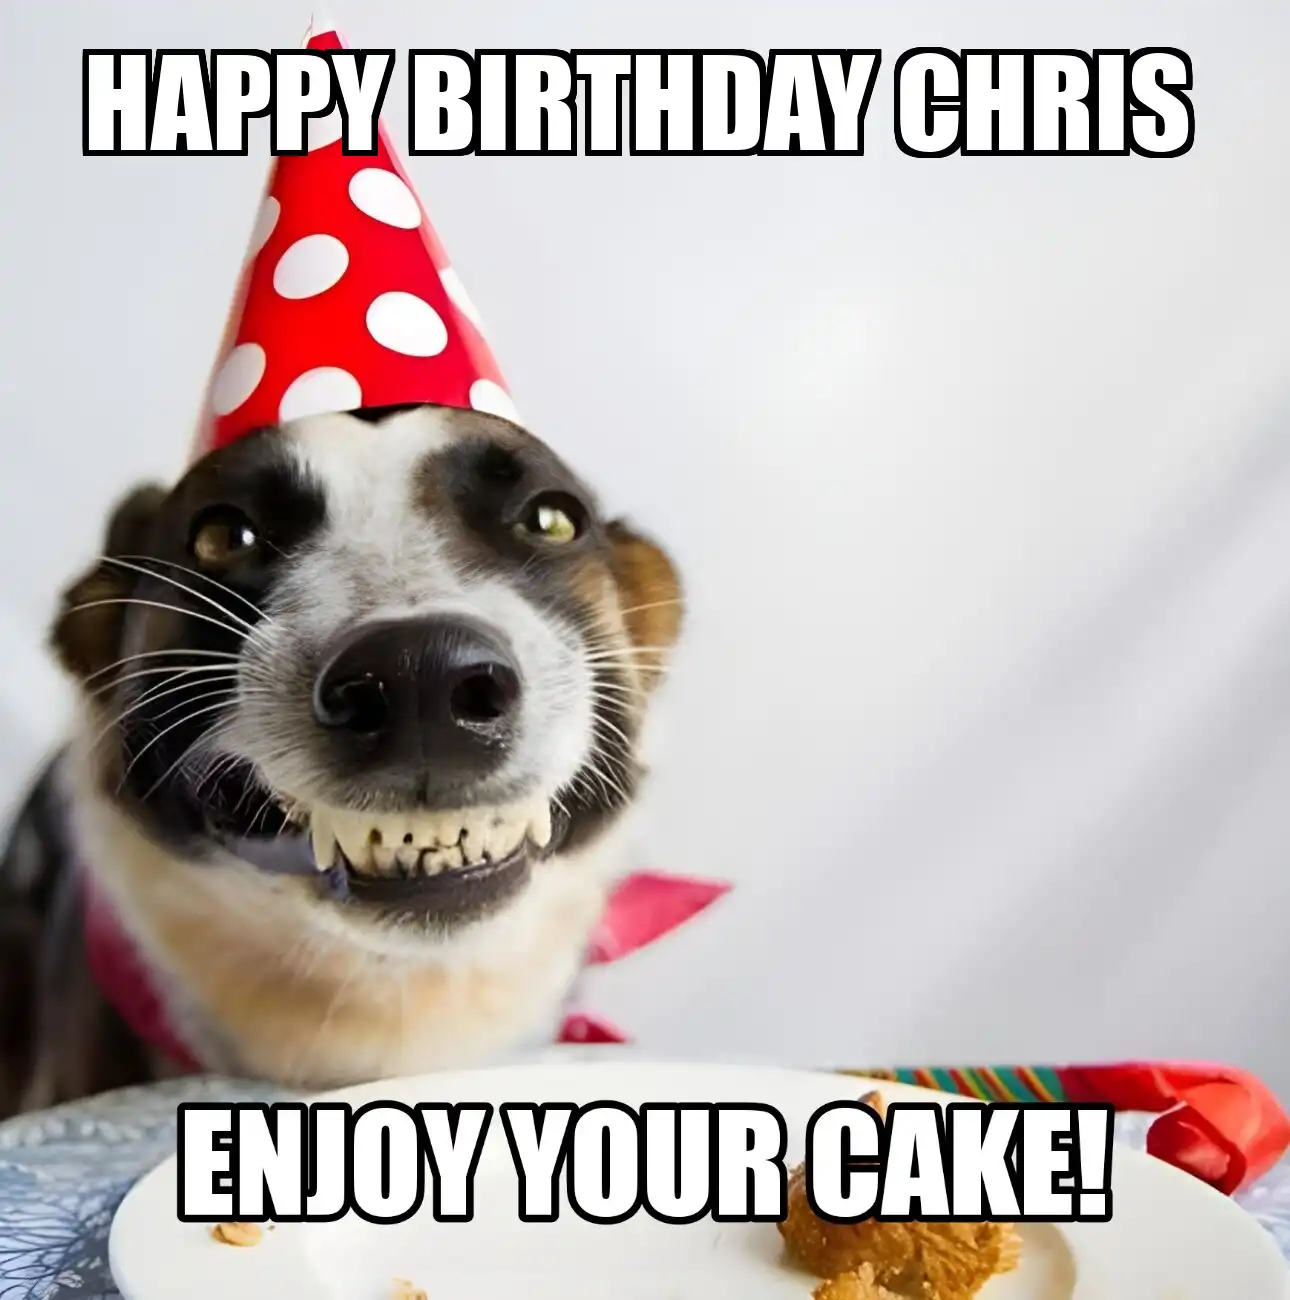 Happy Birthday Chris Enjoy Your Cake Dog Meme